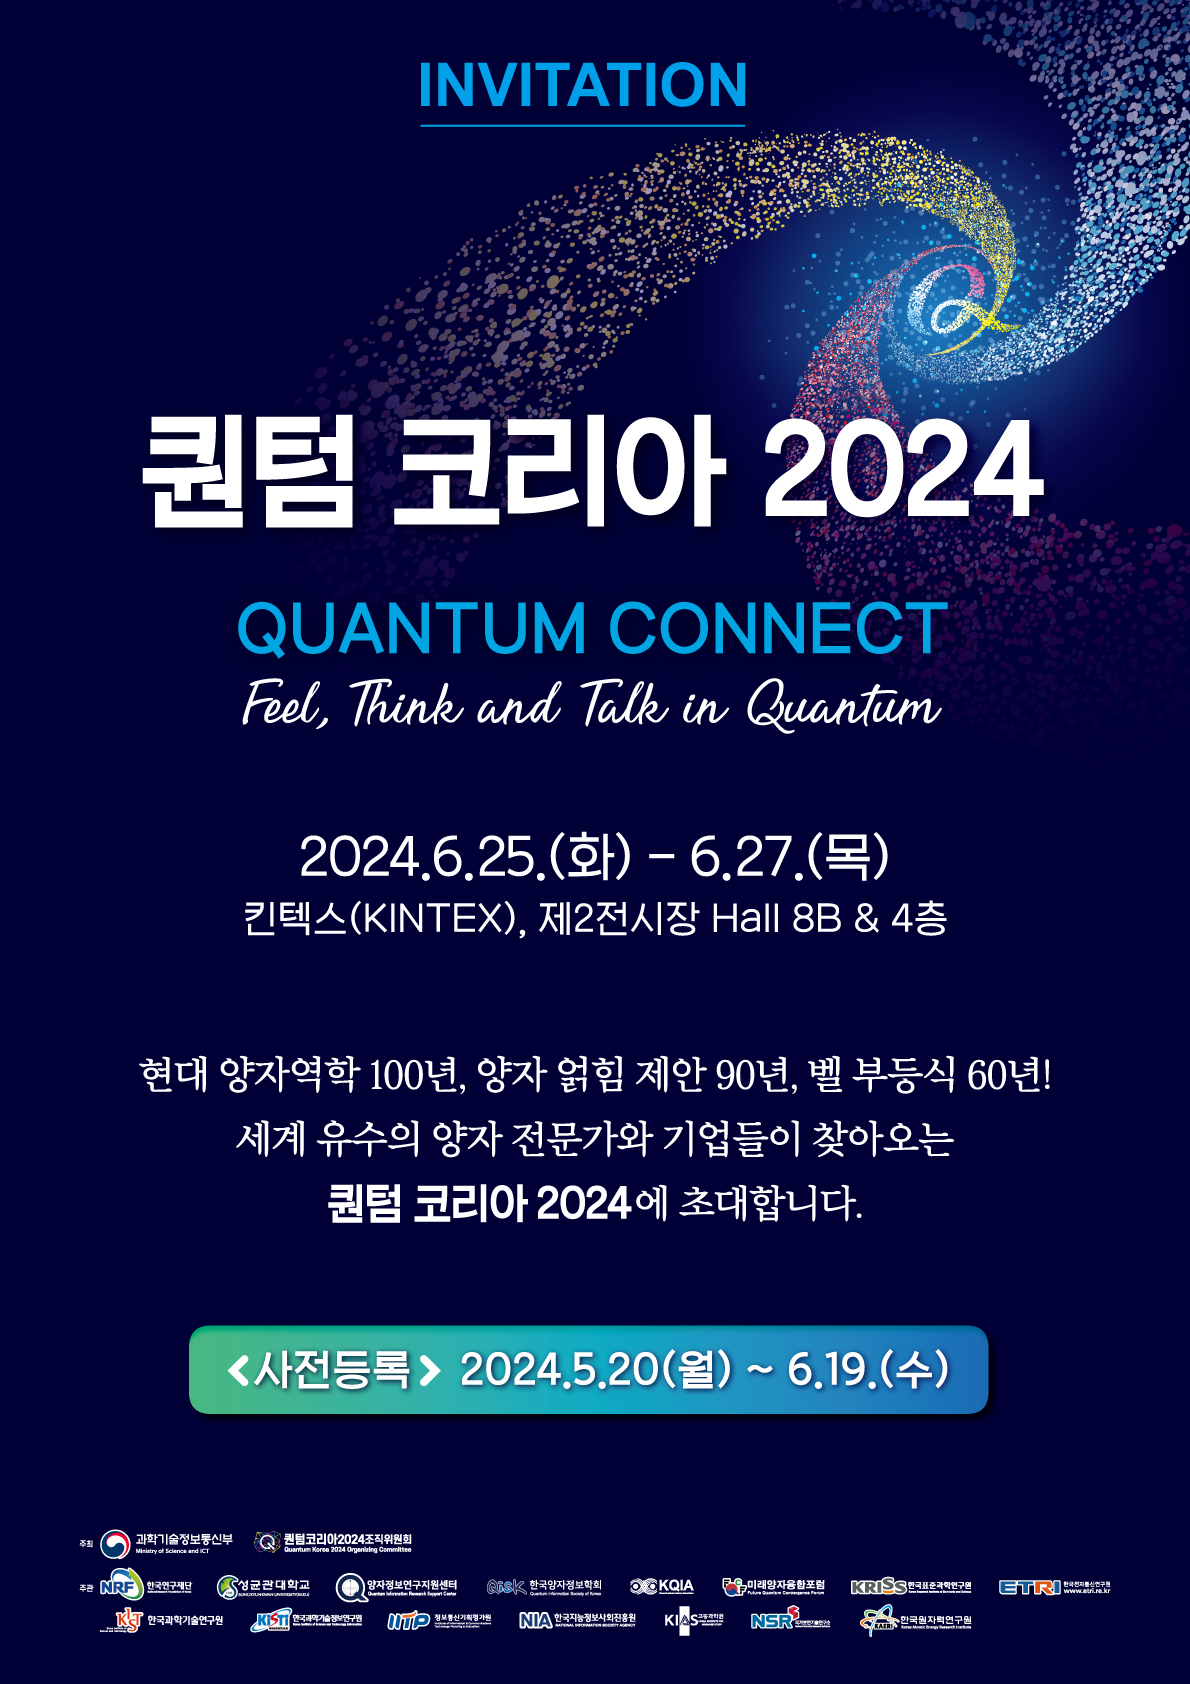 INVITATION
퀀텀 코리아 2024
QUANTUM CONNECT
Feel, Think and Talk in Quantum
2024.6.25.(화) - 6.27.(목)
킨텍스(KINTEX), 제2전시장 Hall 8B & 4층
현대 양자역학 100년, 양자 얽힘 제안 90년, 벨 부등식 60년!
세계 유수의 양자 전문가와 기업들이 찾아오는 퀀텀 코리아 2024에 초대합니다.
(사전등록)2024.5.20(월) ~ 6.19.(수)
주최
과학기술정보통신부 Ministry of Science and ICT
퀀텀코리아2024조직위원회 Quantum Korea 2024 Organizing Committee
주관 
한국연구재단 National Research Foundation of Korea
성균관대학교 SUNGKYUNKWAN UNIVERSITY
양자정보연구지원센터 Quantum Information Research Support Center
Qisk 한국양자정보학회  Quantum Information Society of Korea
KQIA Korea Quantum Industry Association
미래양자융합포럼 Future Quantum Convergence Forum
KRISS한국표준과학연구원 Korea Research Institute of Standards and Science
ETRI 한국전자통신연구원 www.etri.re.k
KIST 한국과학기술연구원 Korea Institute of Science and Technology
KiSTi www.kisti.re.kr 한국과학기술정보연구원 Korea Institute of Science and Technology Information
IITP 정보통신기획평가원 Institute for Information & communication Technology Planning & evaluation
NIA 한국지능정보사회진흥원 National Information Society Agency
KIAS 고등과학원 Korea Institute for Advanced Study
NSR 국가보안기술연구소 National Security Research Institute
KAERI 한국원자력연구원 Korea Atomic Energy Research Institute